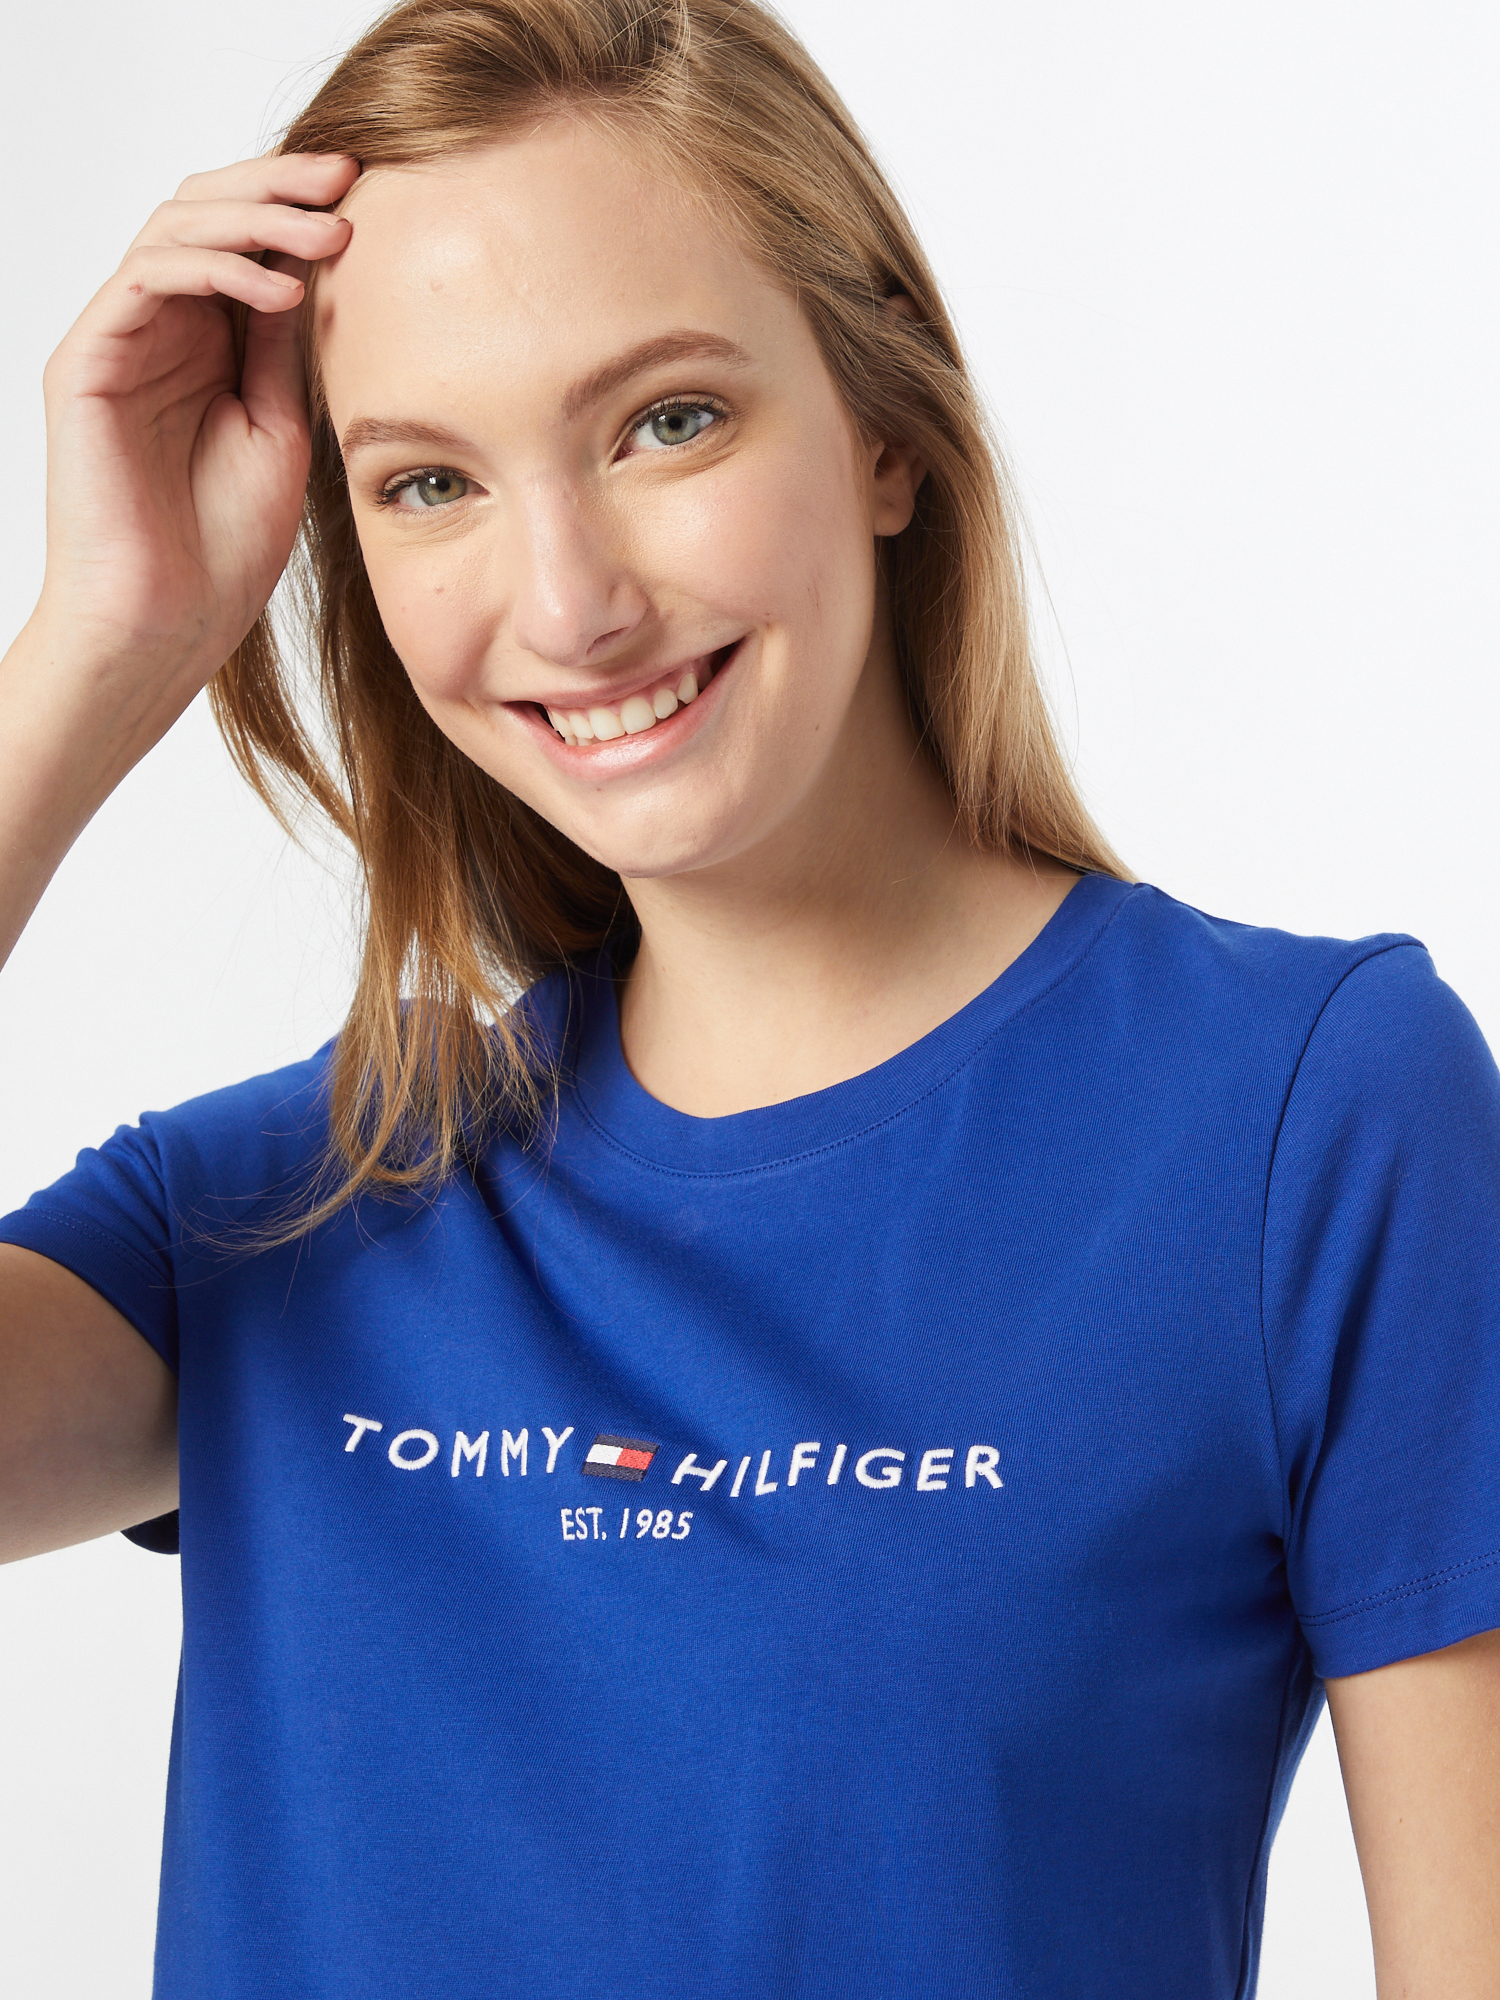 TOMMY HILFIGER T-Shirt in Navy, Royalblau 